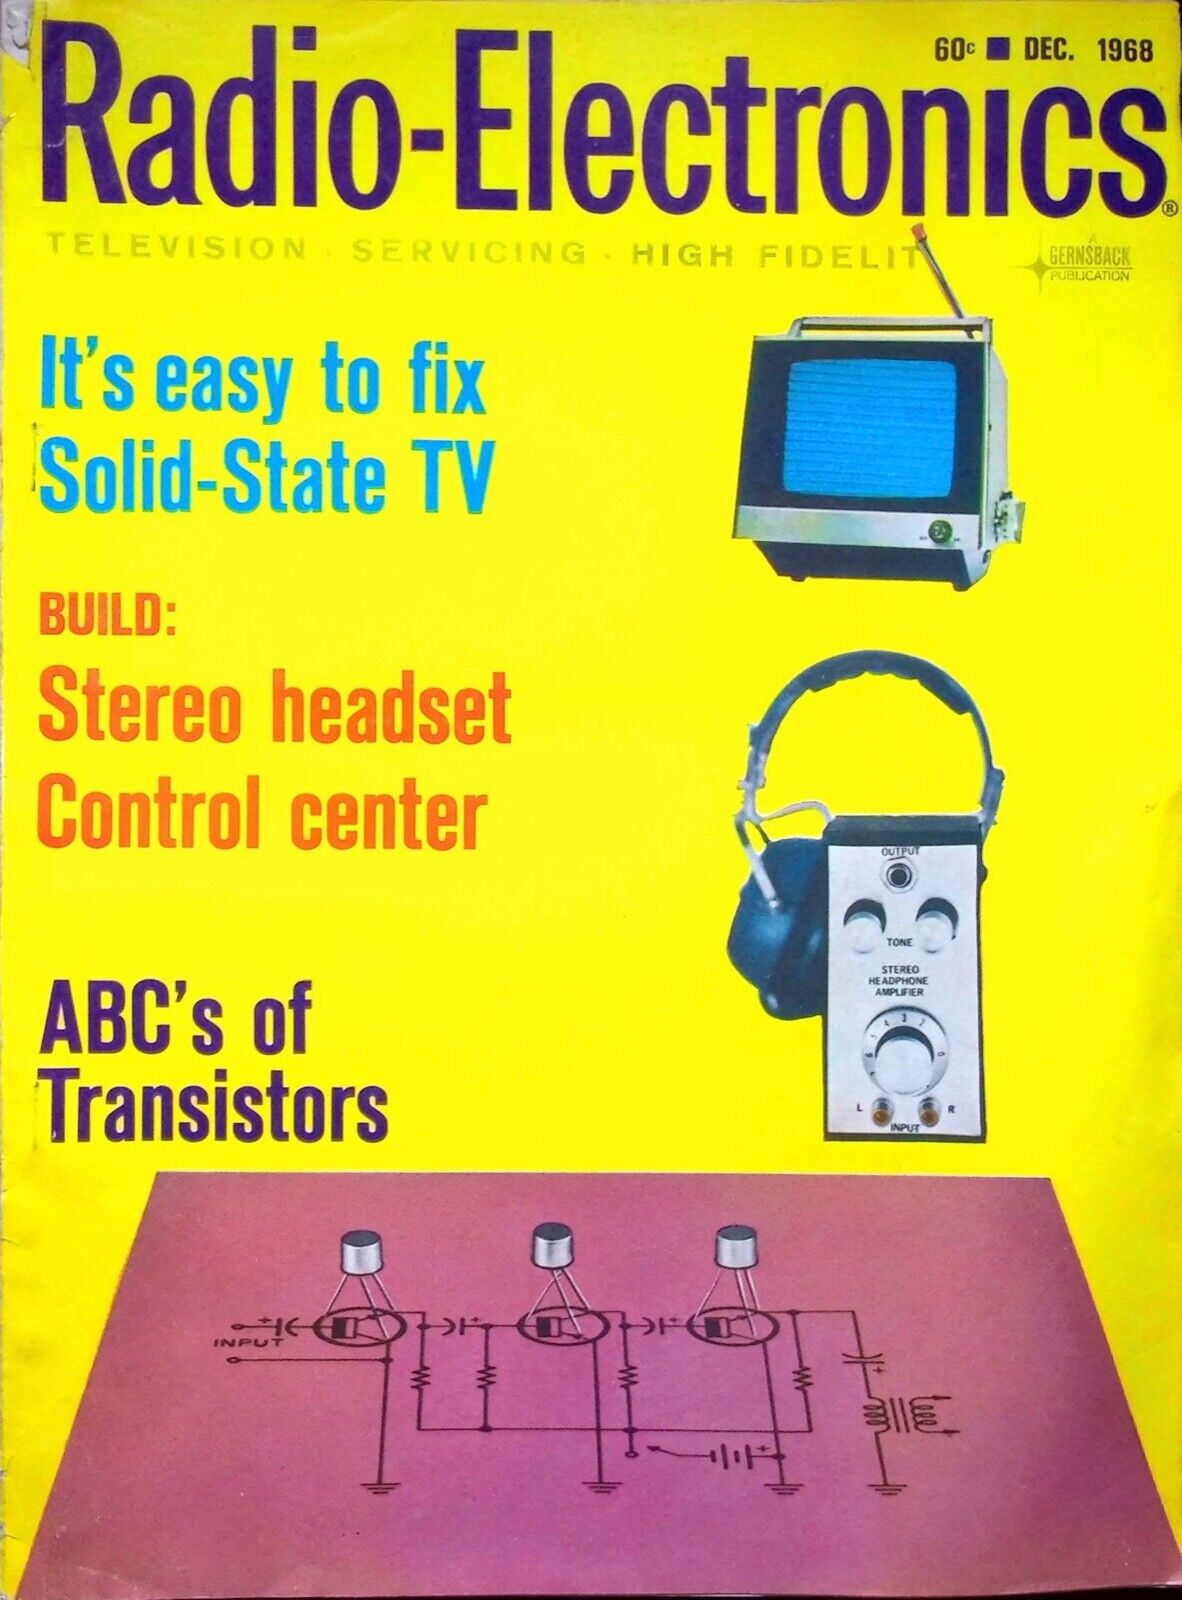 STEREO HEADSET - RADIO - ELECTRONICS MAGAZINE, DECEMBER 1968 